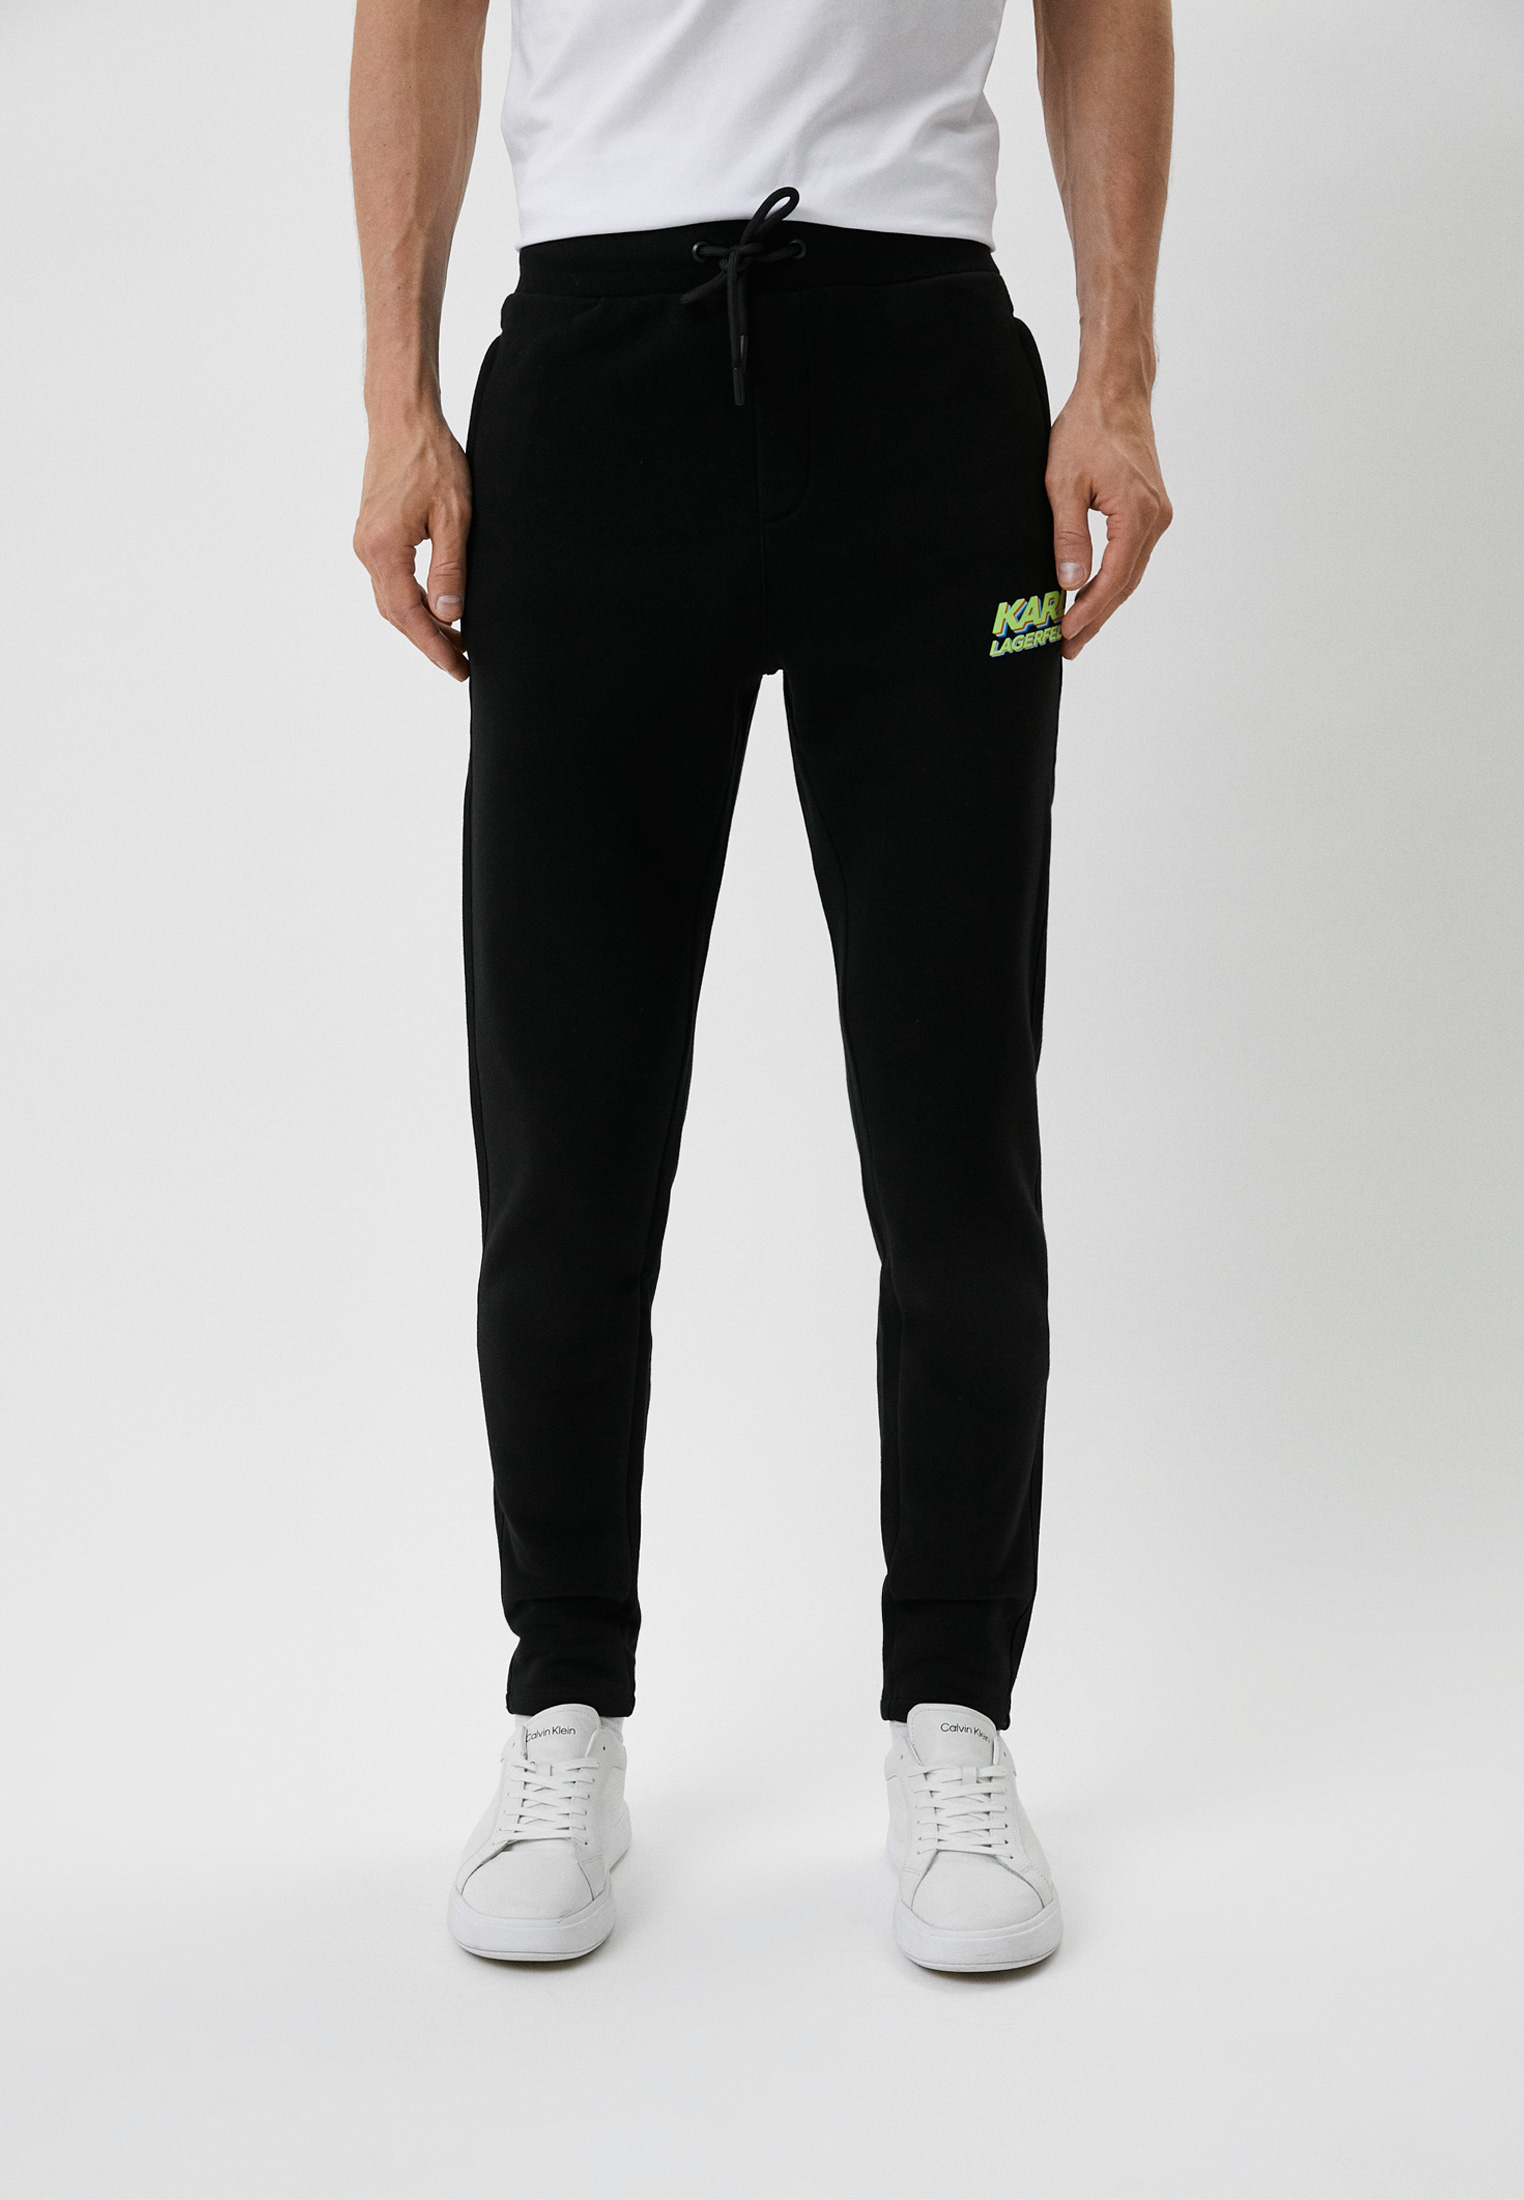 Мужские спортивные брюки Karl Lagerfeld (Карл Лагерфельд) 705081-523910